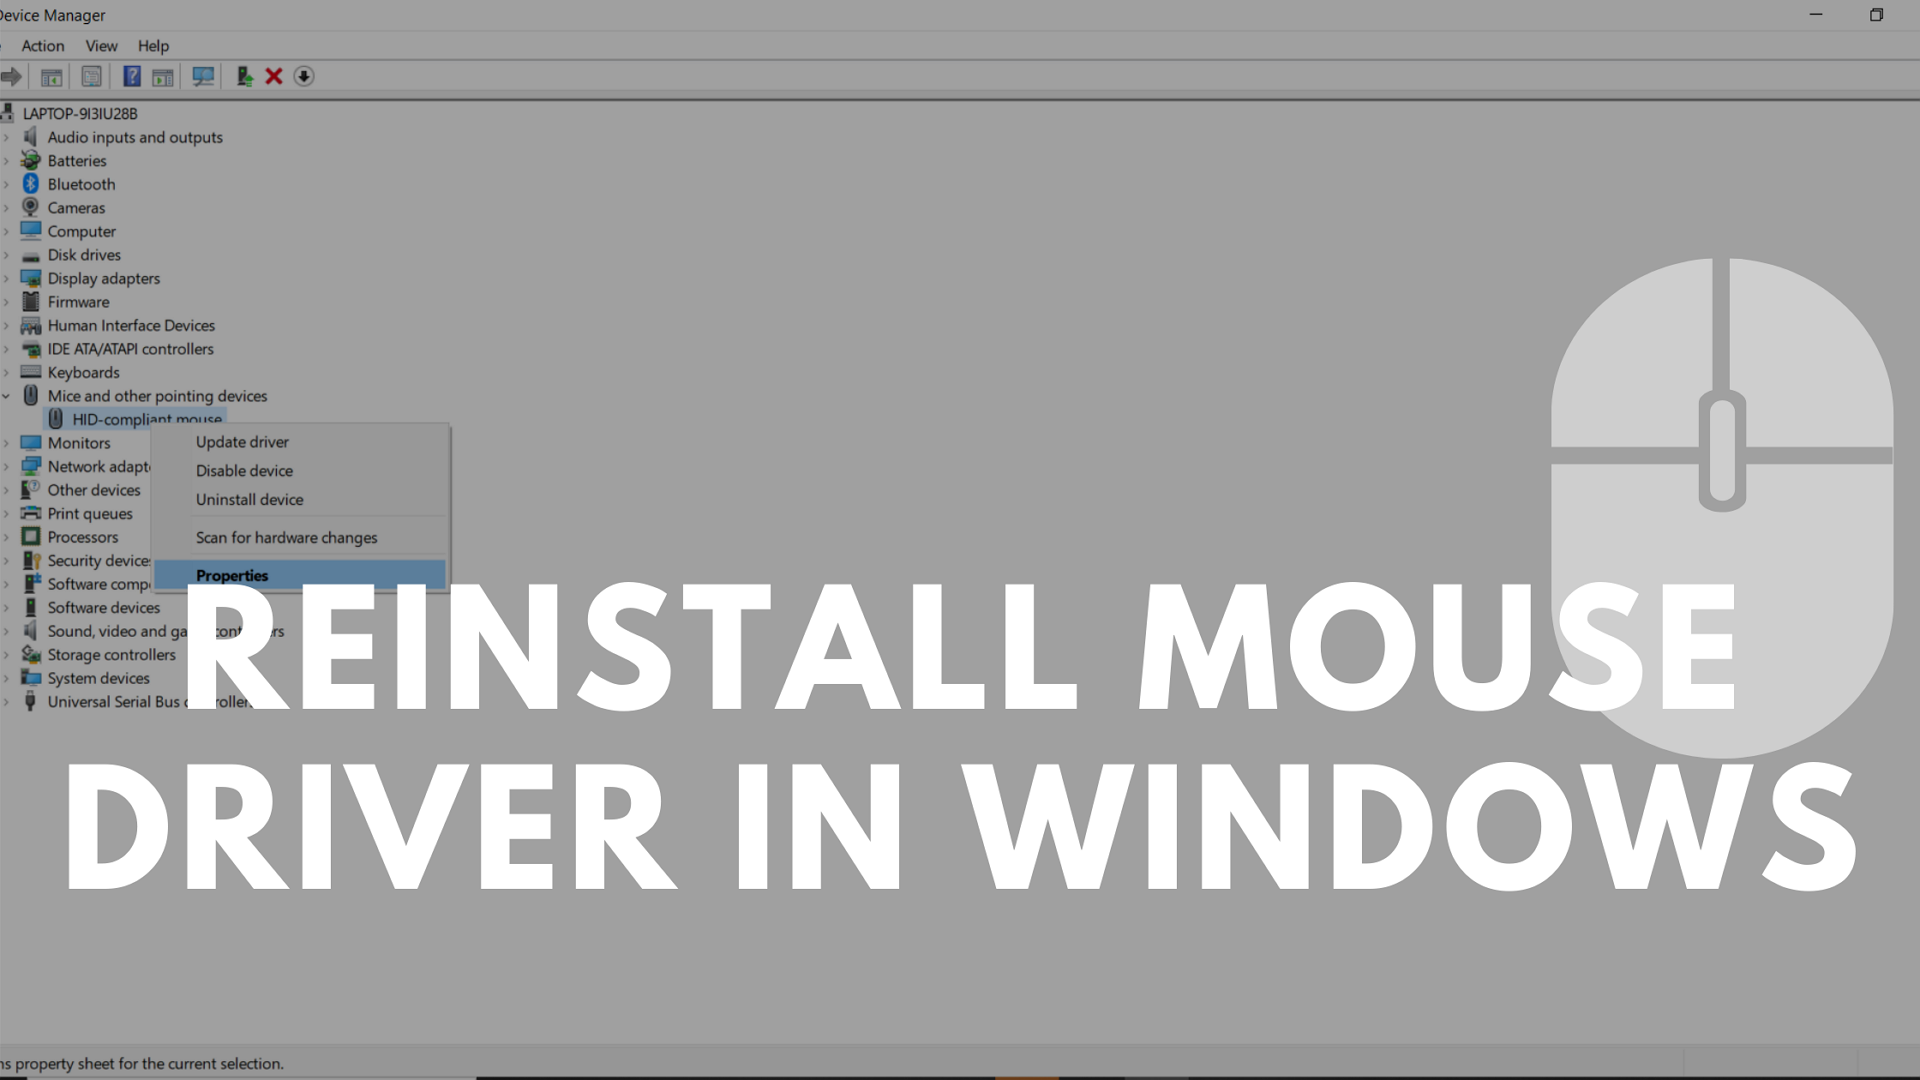 Windows mouse driver